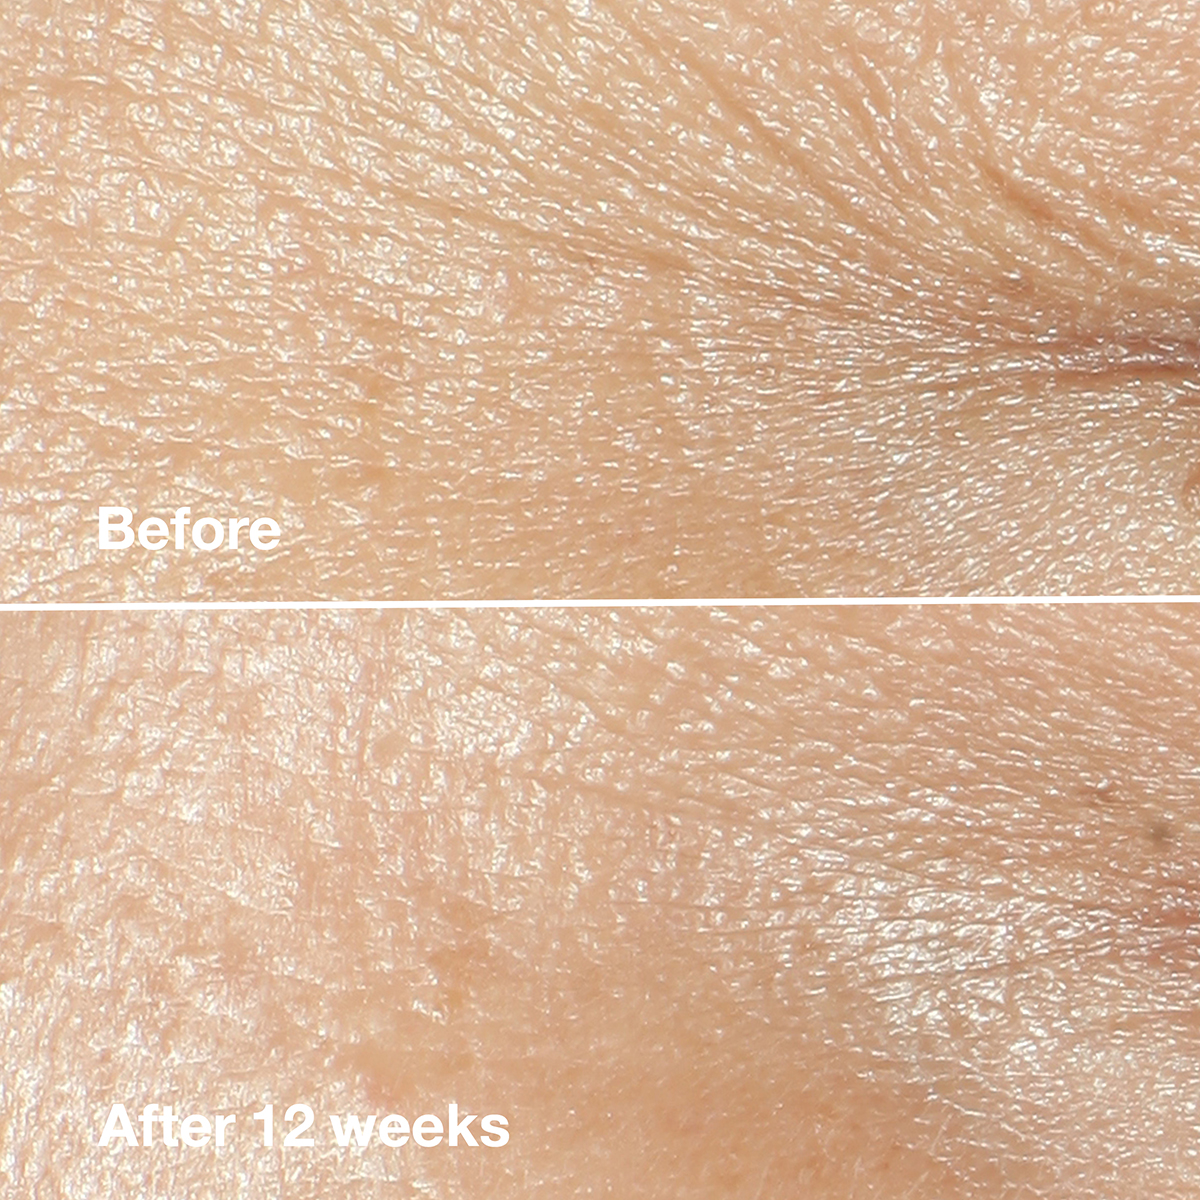 Clinique Smart Clinical Repair(tm) Wrinkle Correcting Face Cream